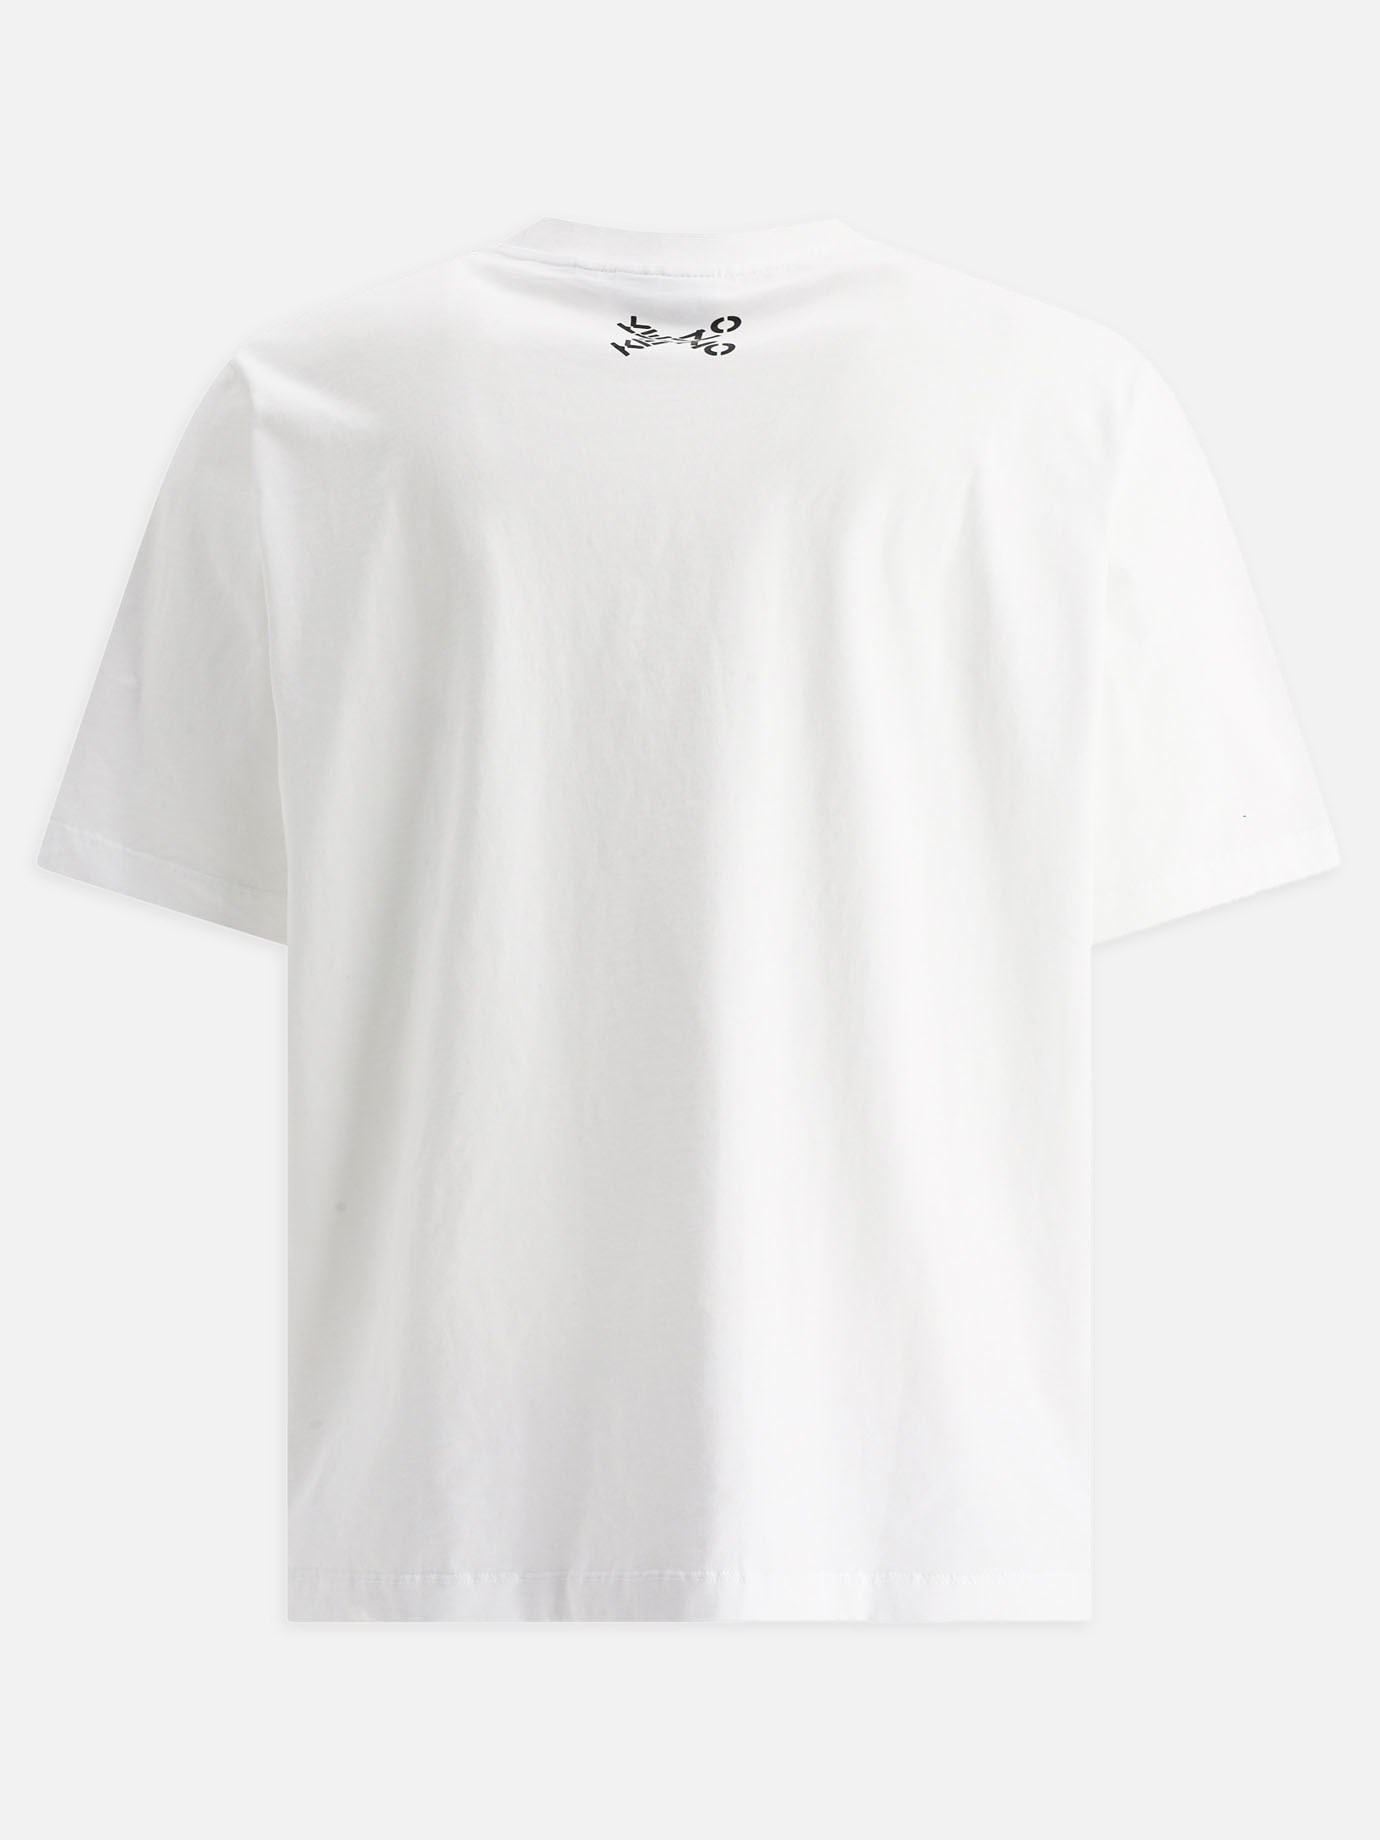  Big X  t-shirt by Kenzo